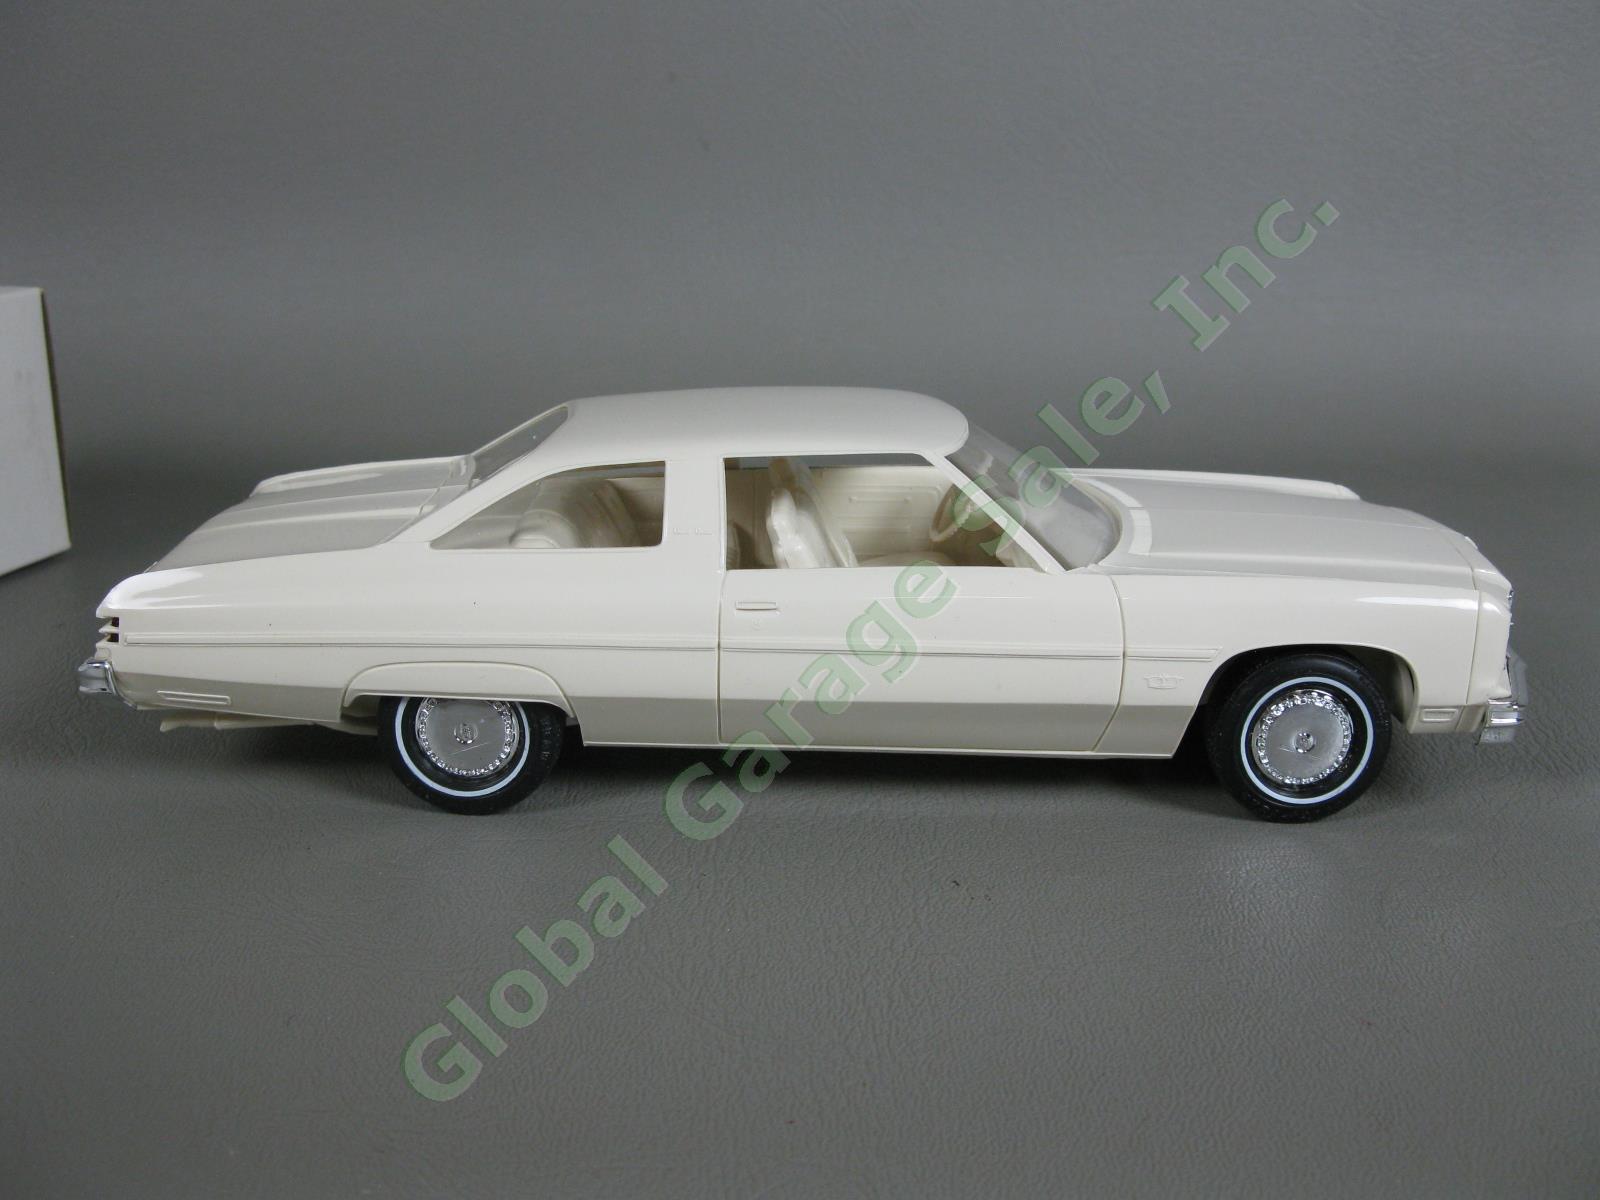 Original VTG 1976 Chevrolet Caprice Classic White Plastic Dealer Promo Model Car 3